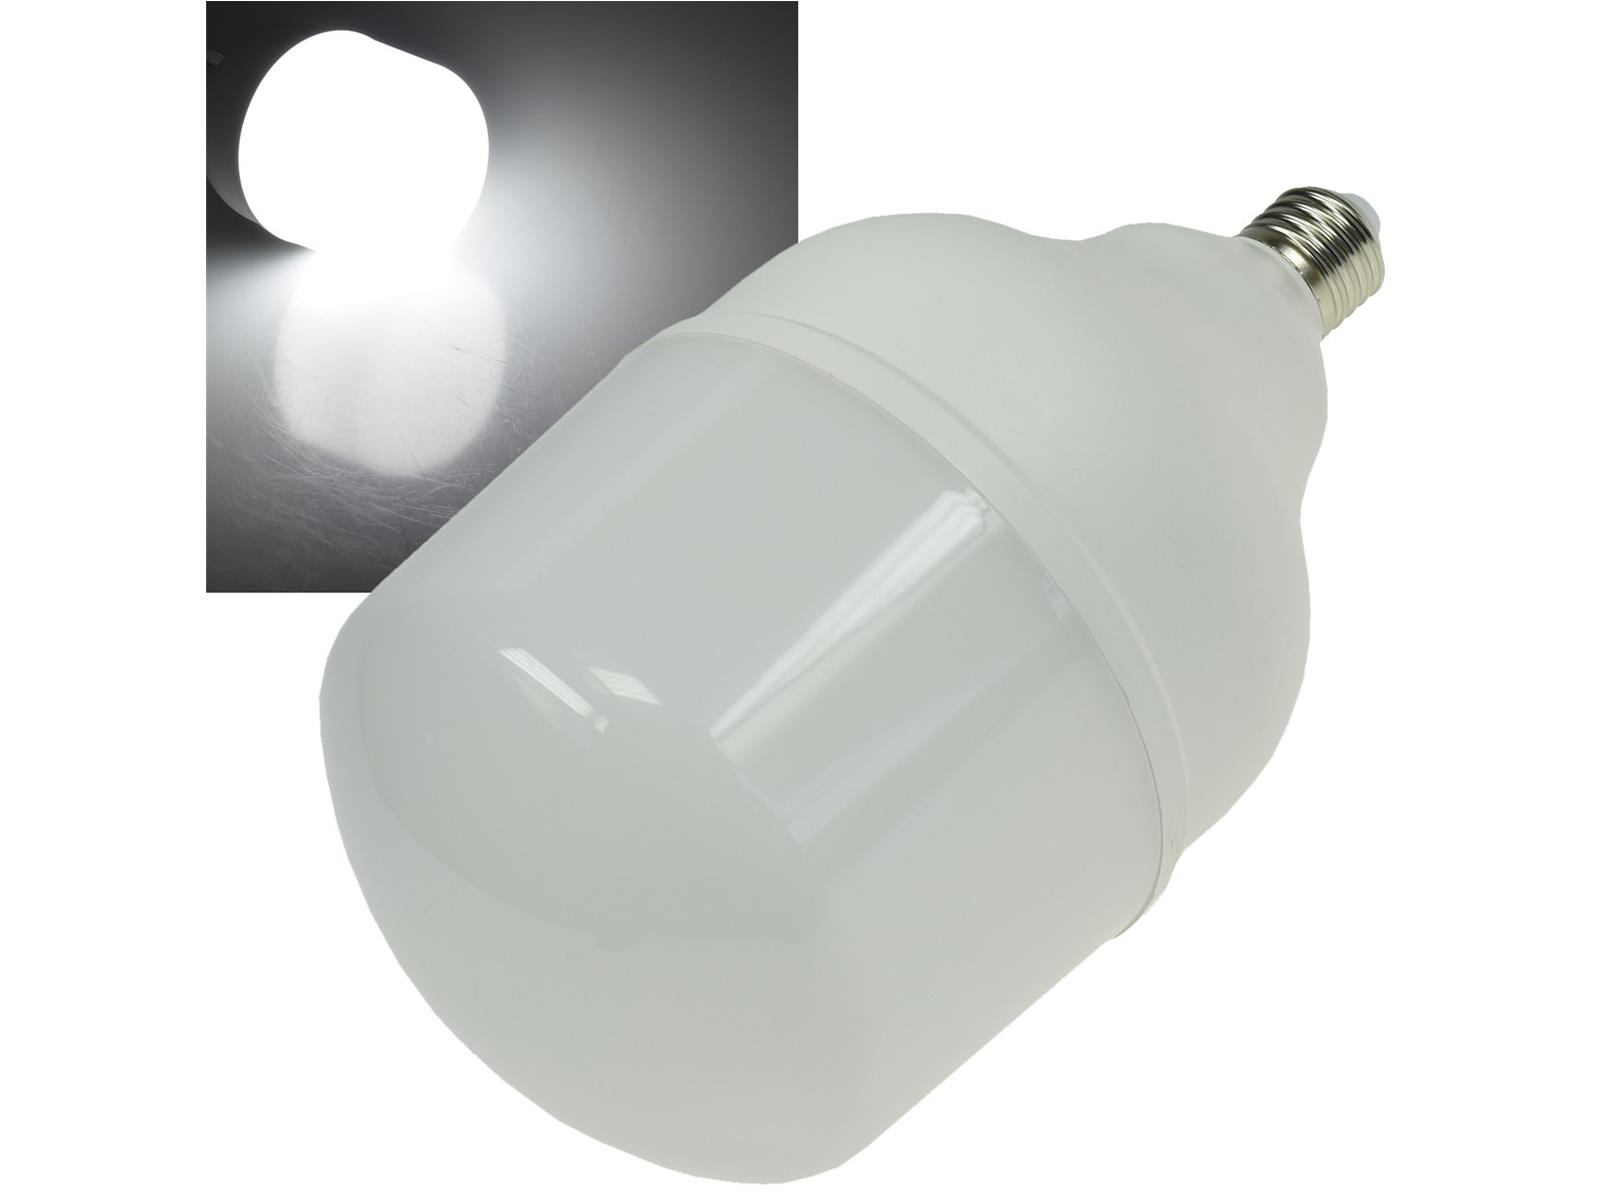 LED Jumbo Lampe E27 42W "G480n"4198lm, 4200K, neutralweiß, ØxH 14x24cm